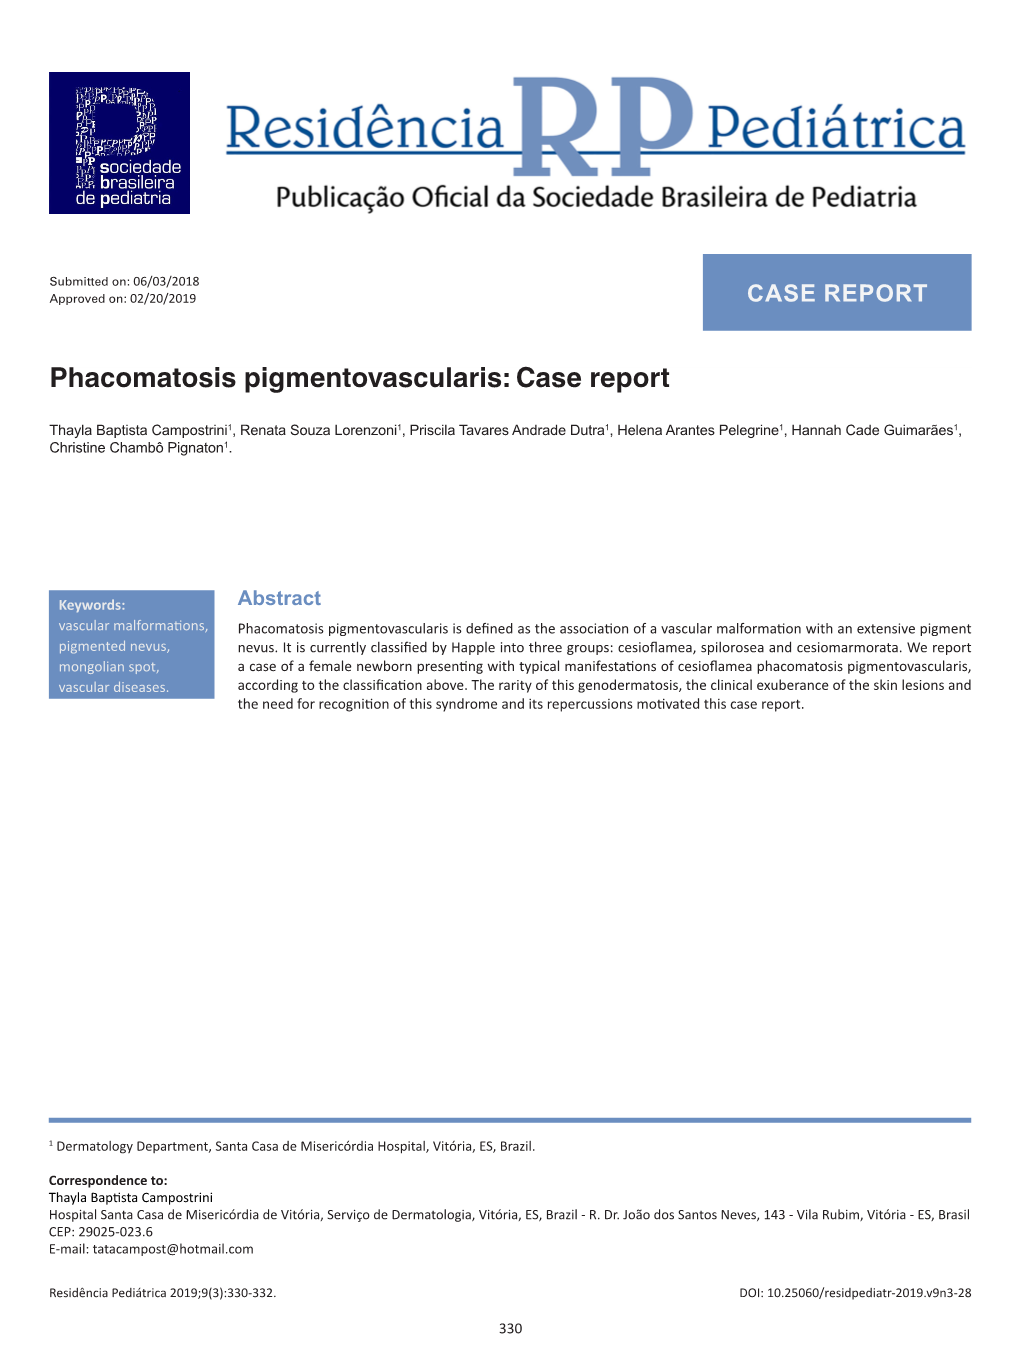 Phacomatosis Pigmentovascularis: Case Report